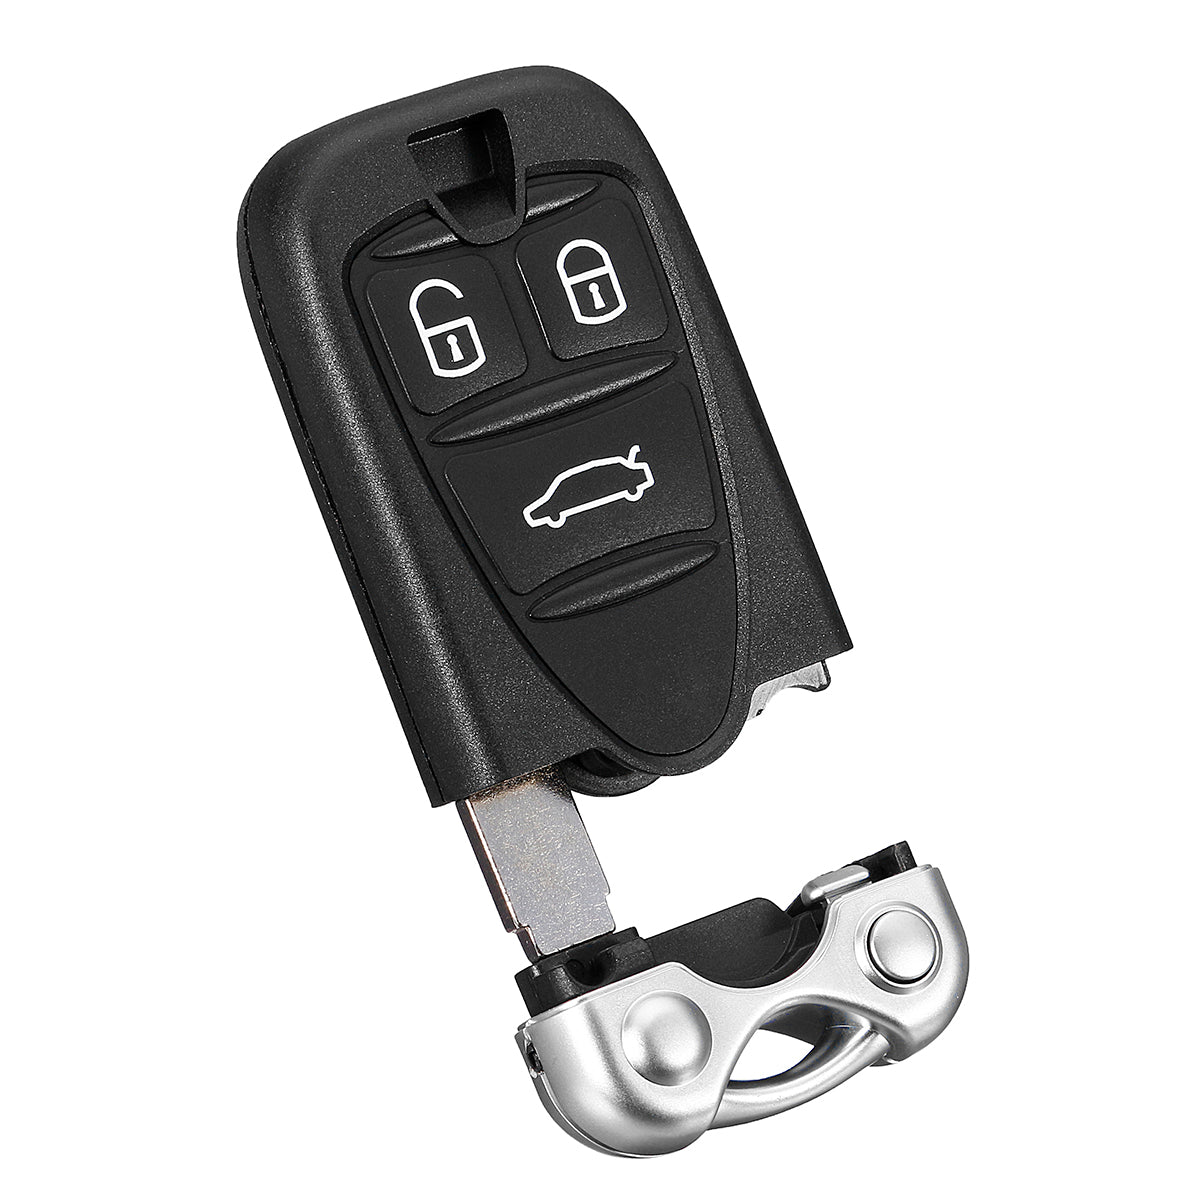 3 Buttons Remote Key Fob Case w/ CR2032 Battery For Alfa Romeo Brera/156/159/GT - Auto GoShop